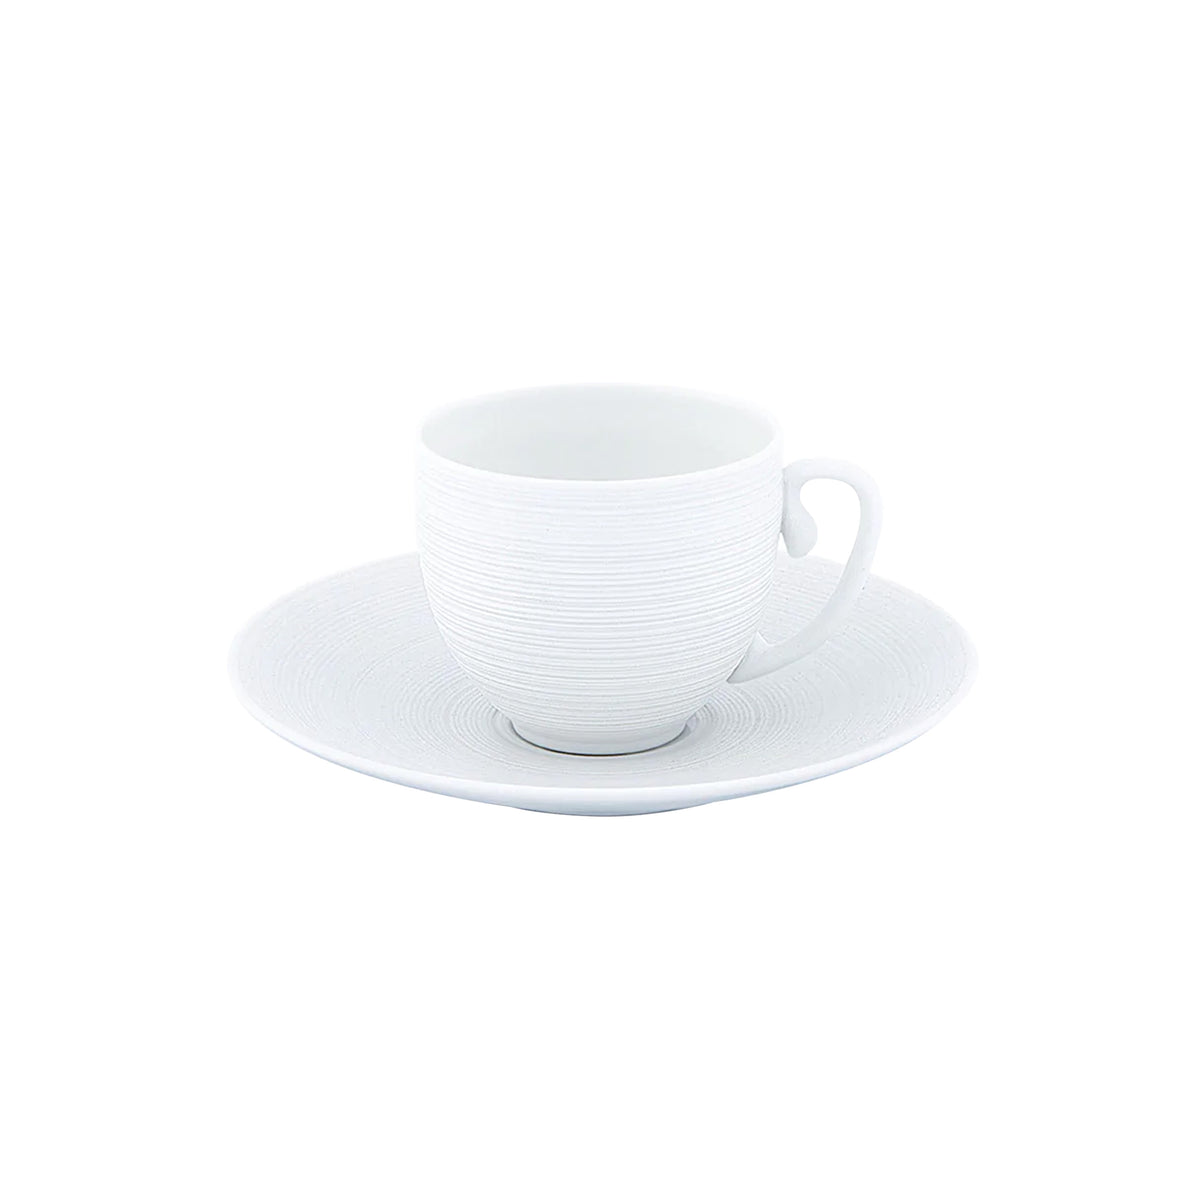 HEMISPHERE White Satin - Cappuccino cup & saucer